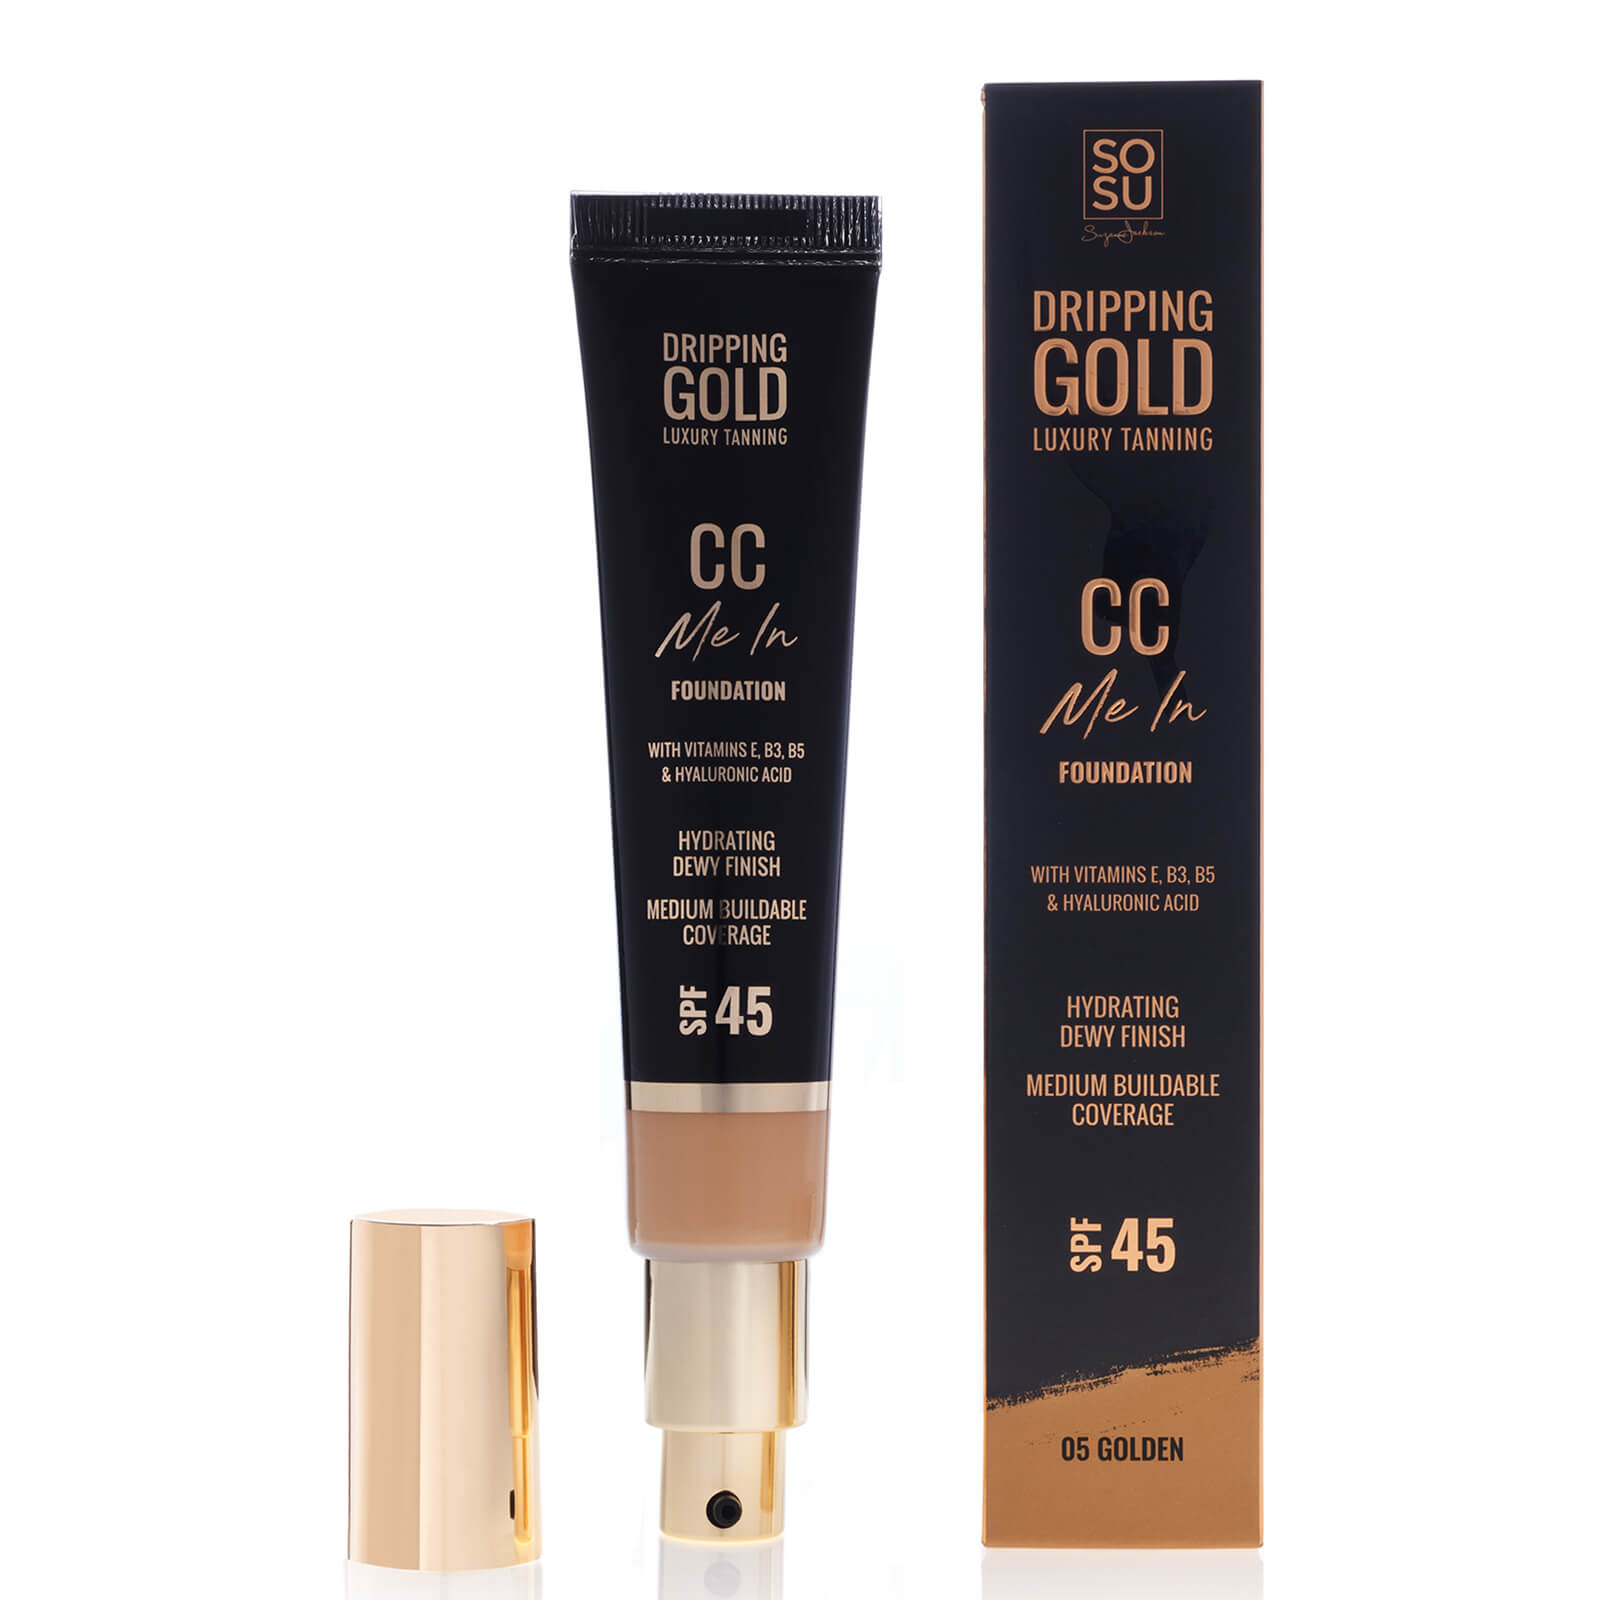 Dripping Gold CC Cream SPF 52g (Various Shades) - Golden